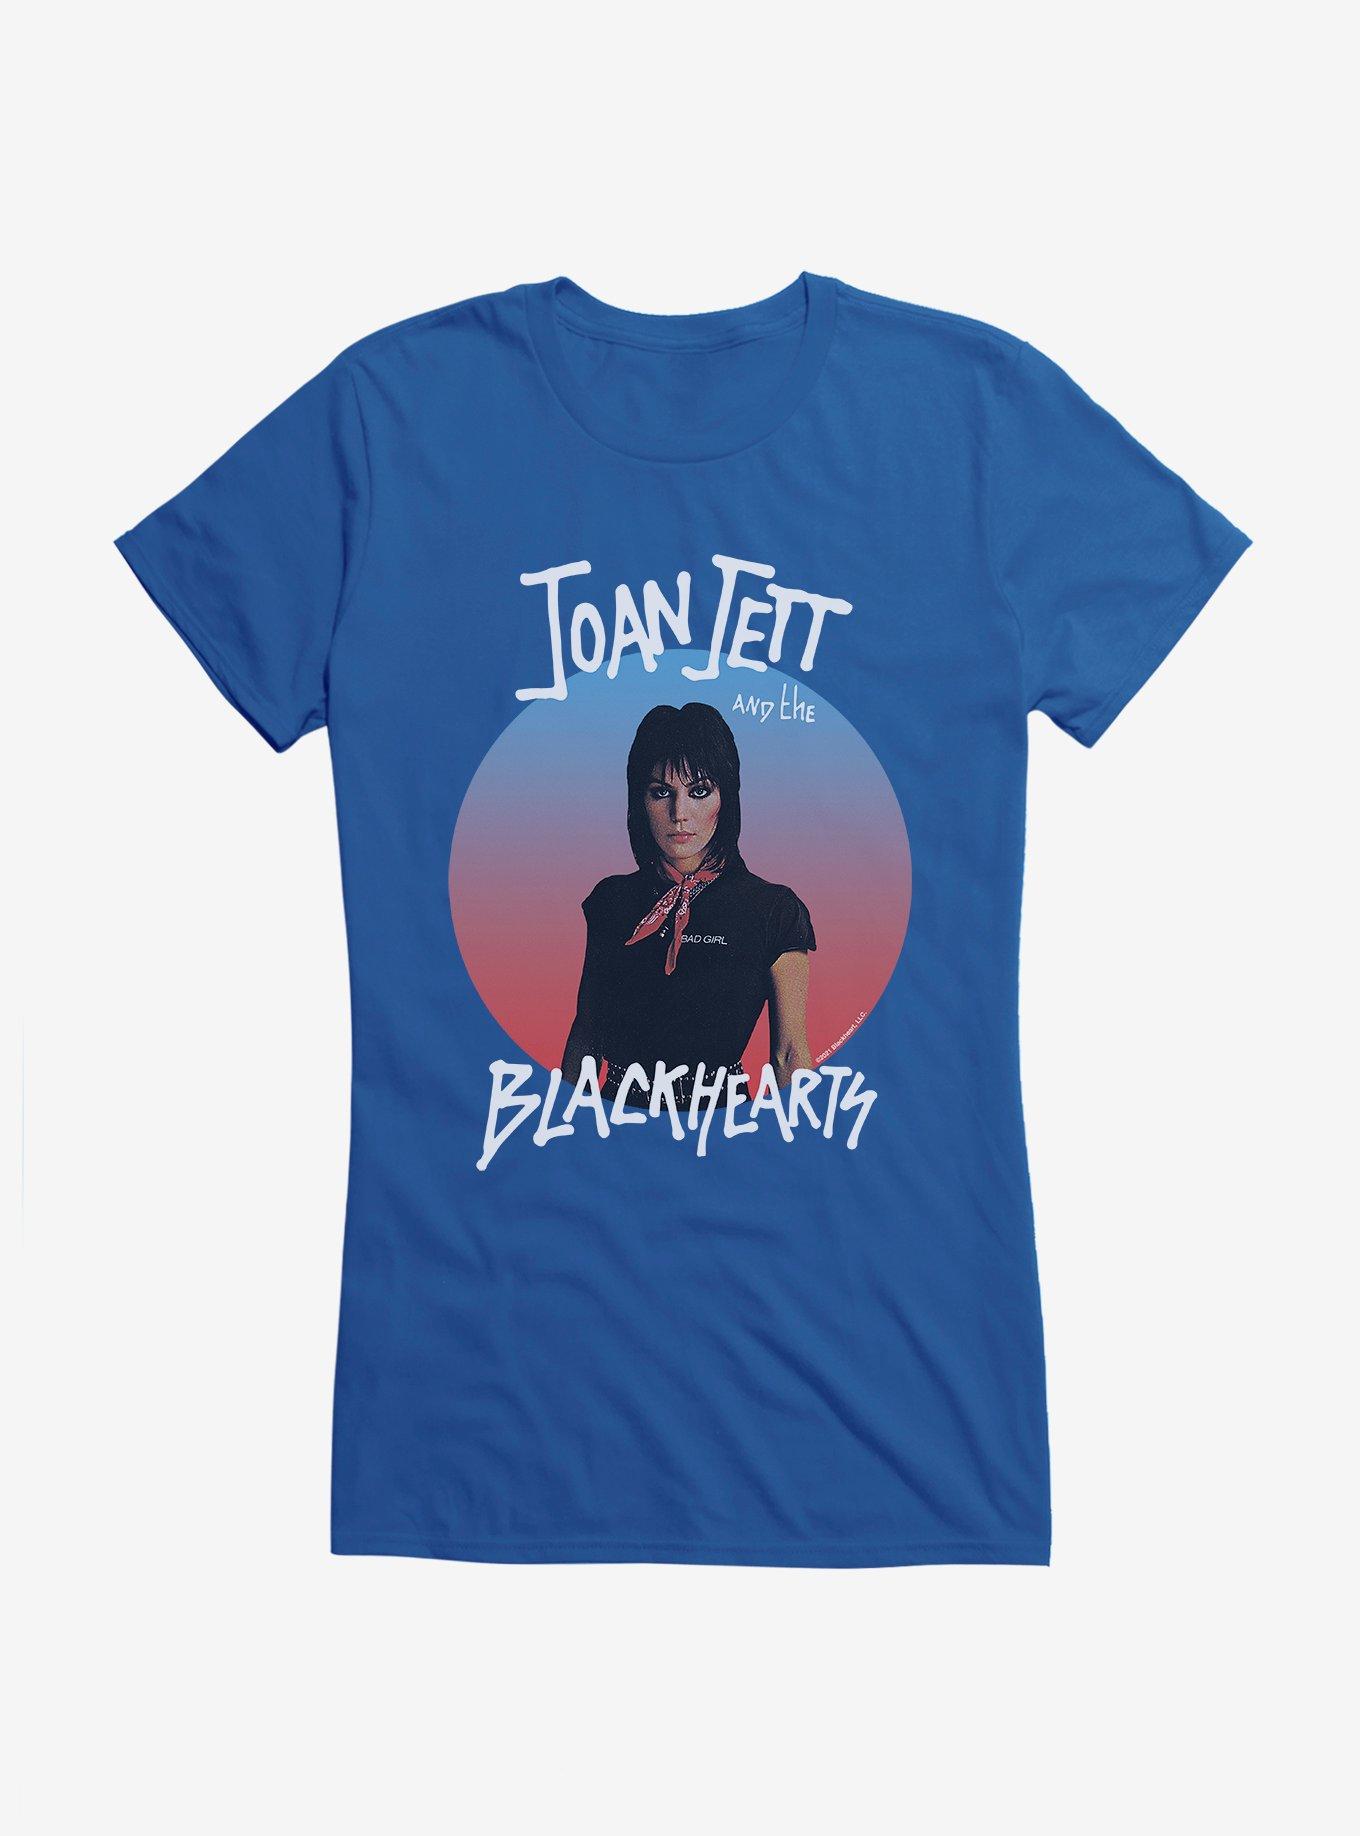 Joan Jett Crimson And Clover Album Art Girls T-Shirt